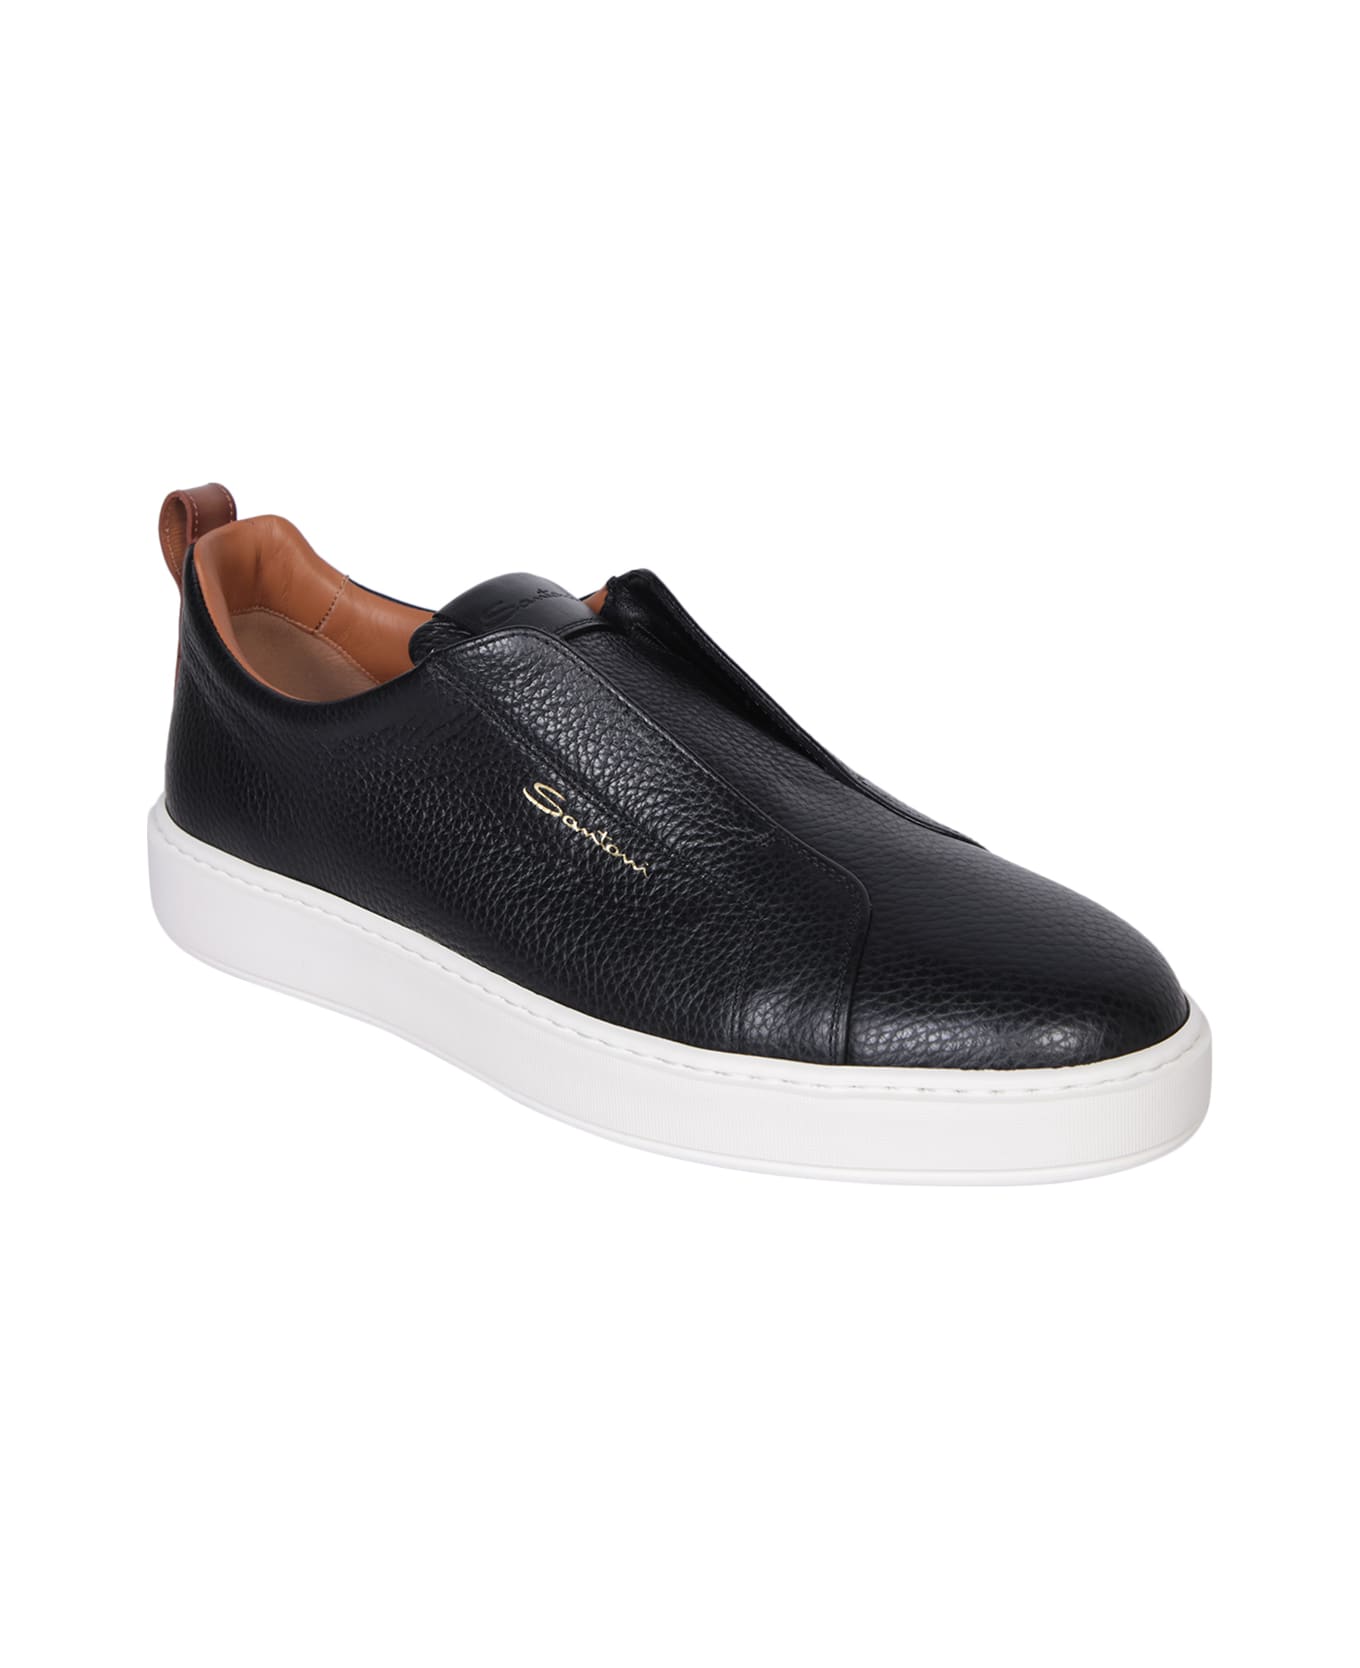 Santoni Victor Leather Slip-on Black Sneakers - Black スニーカー